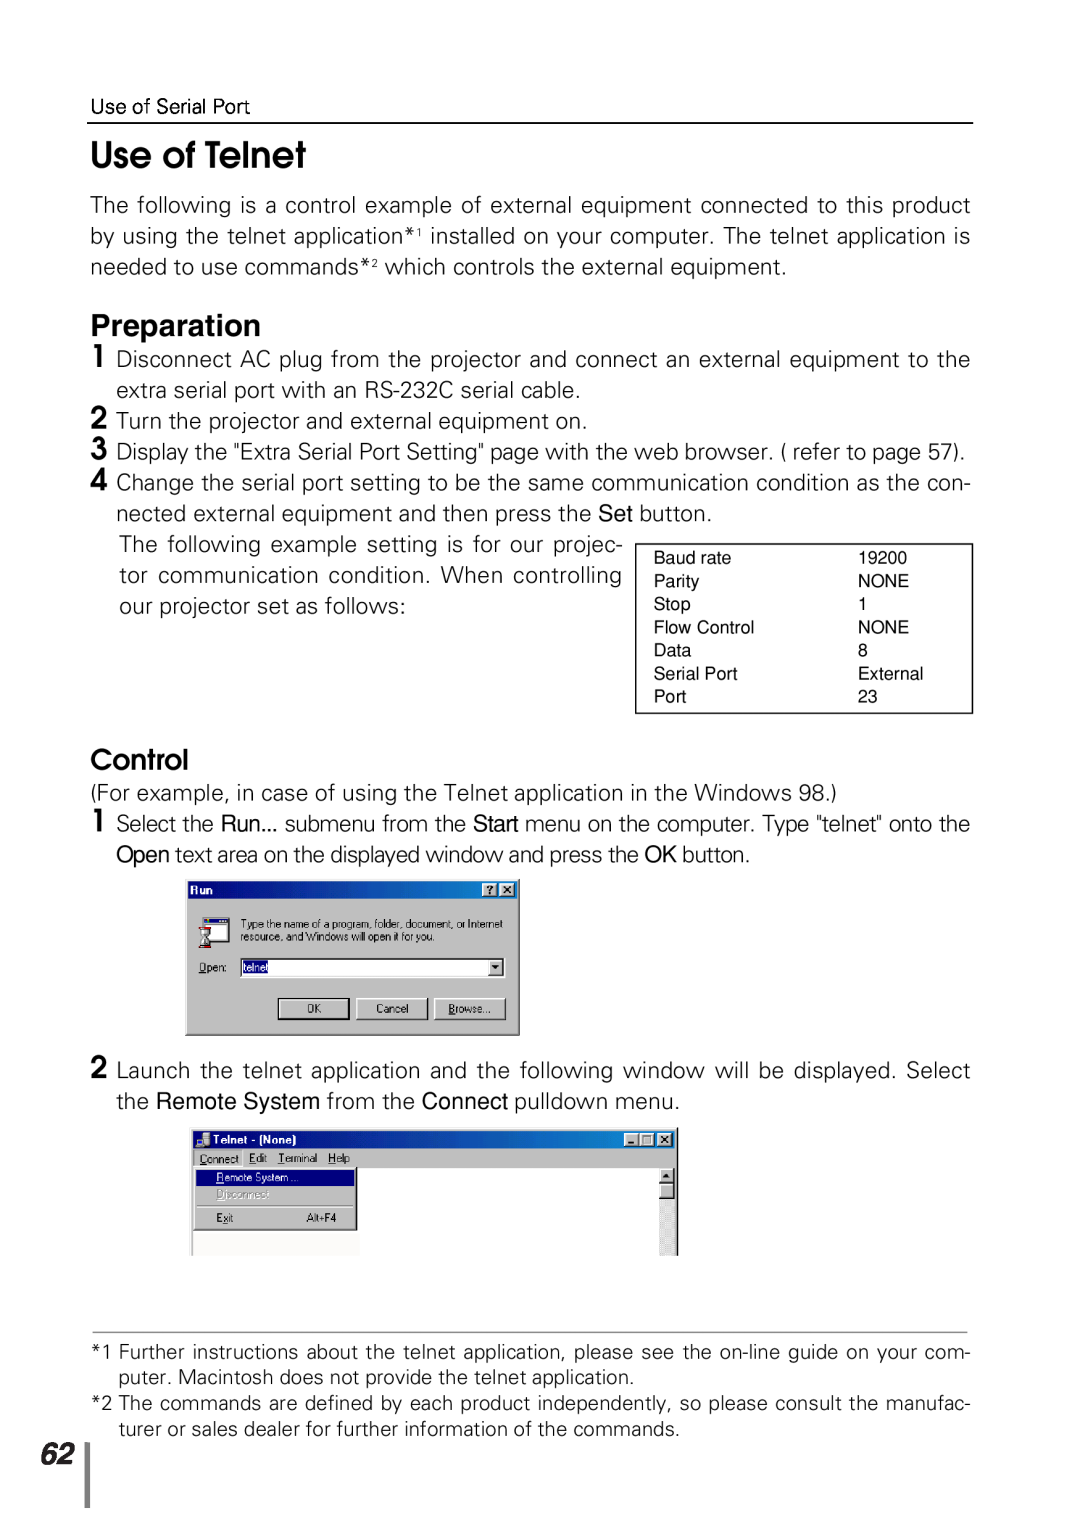 Sanyo POA-PN10 owner manual Use of Telnet, Preparation, Control 